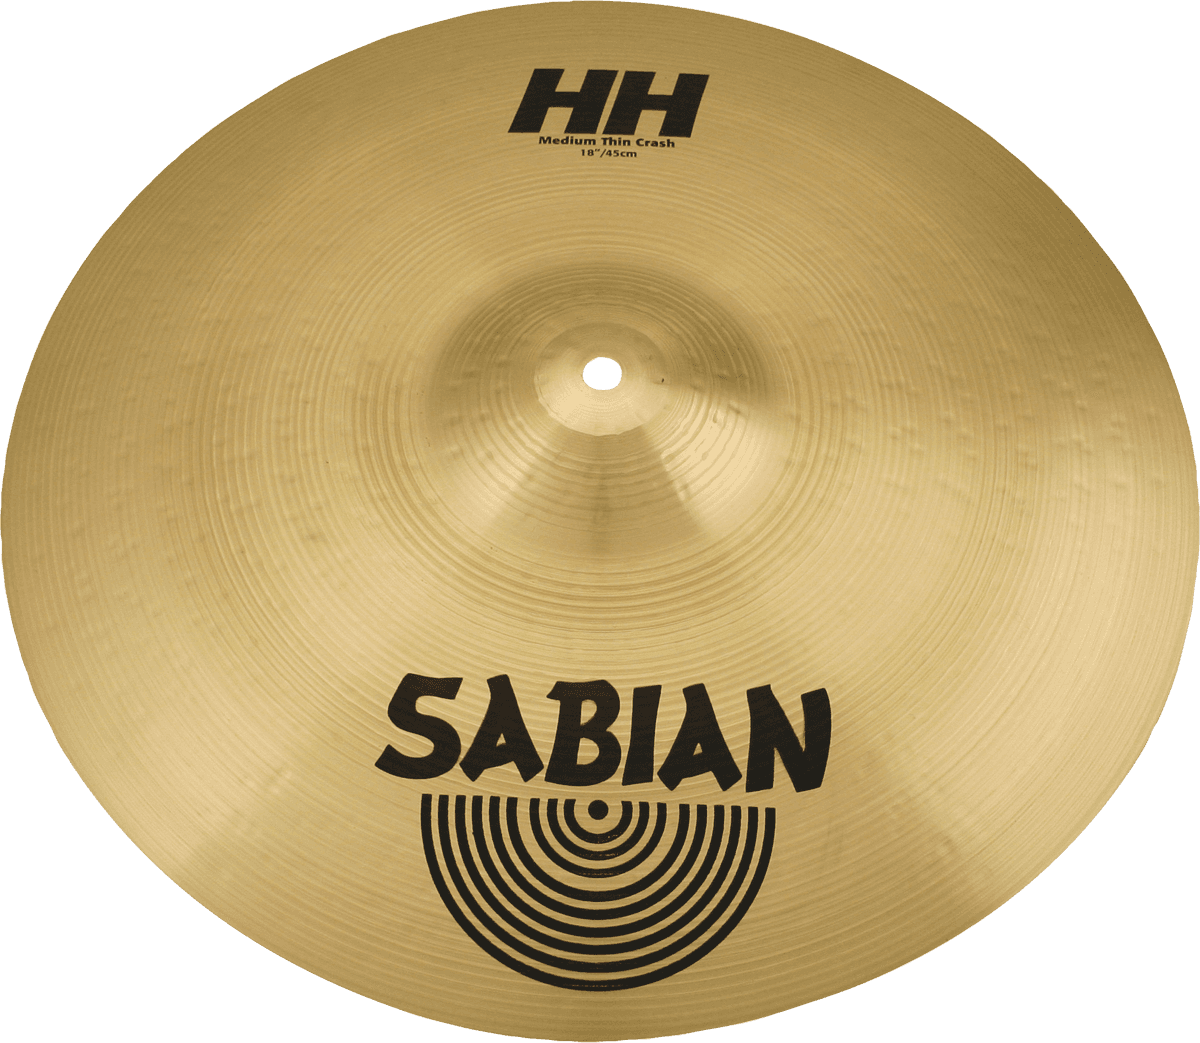 Sabian Hh Medium-thin Crash - 18 Pouces - Cymbale Crash - Main picture